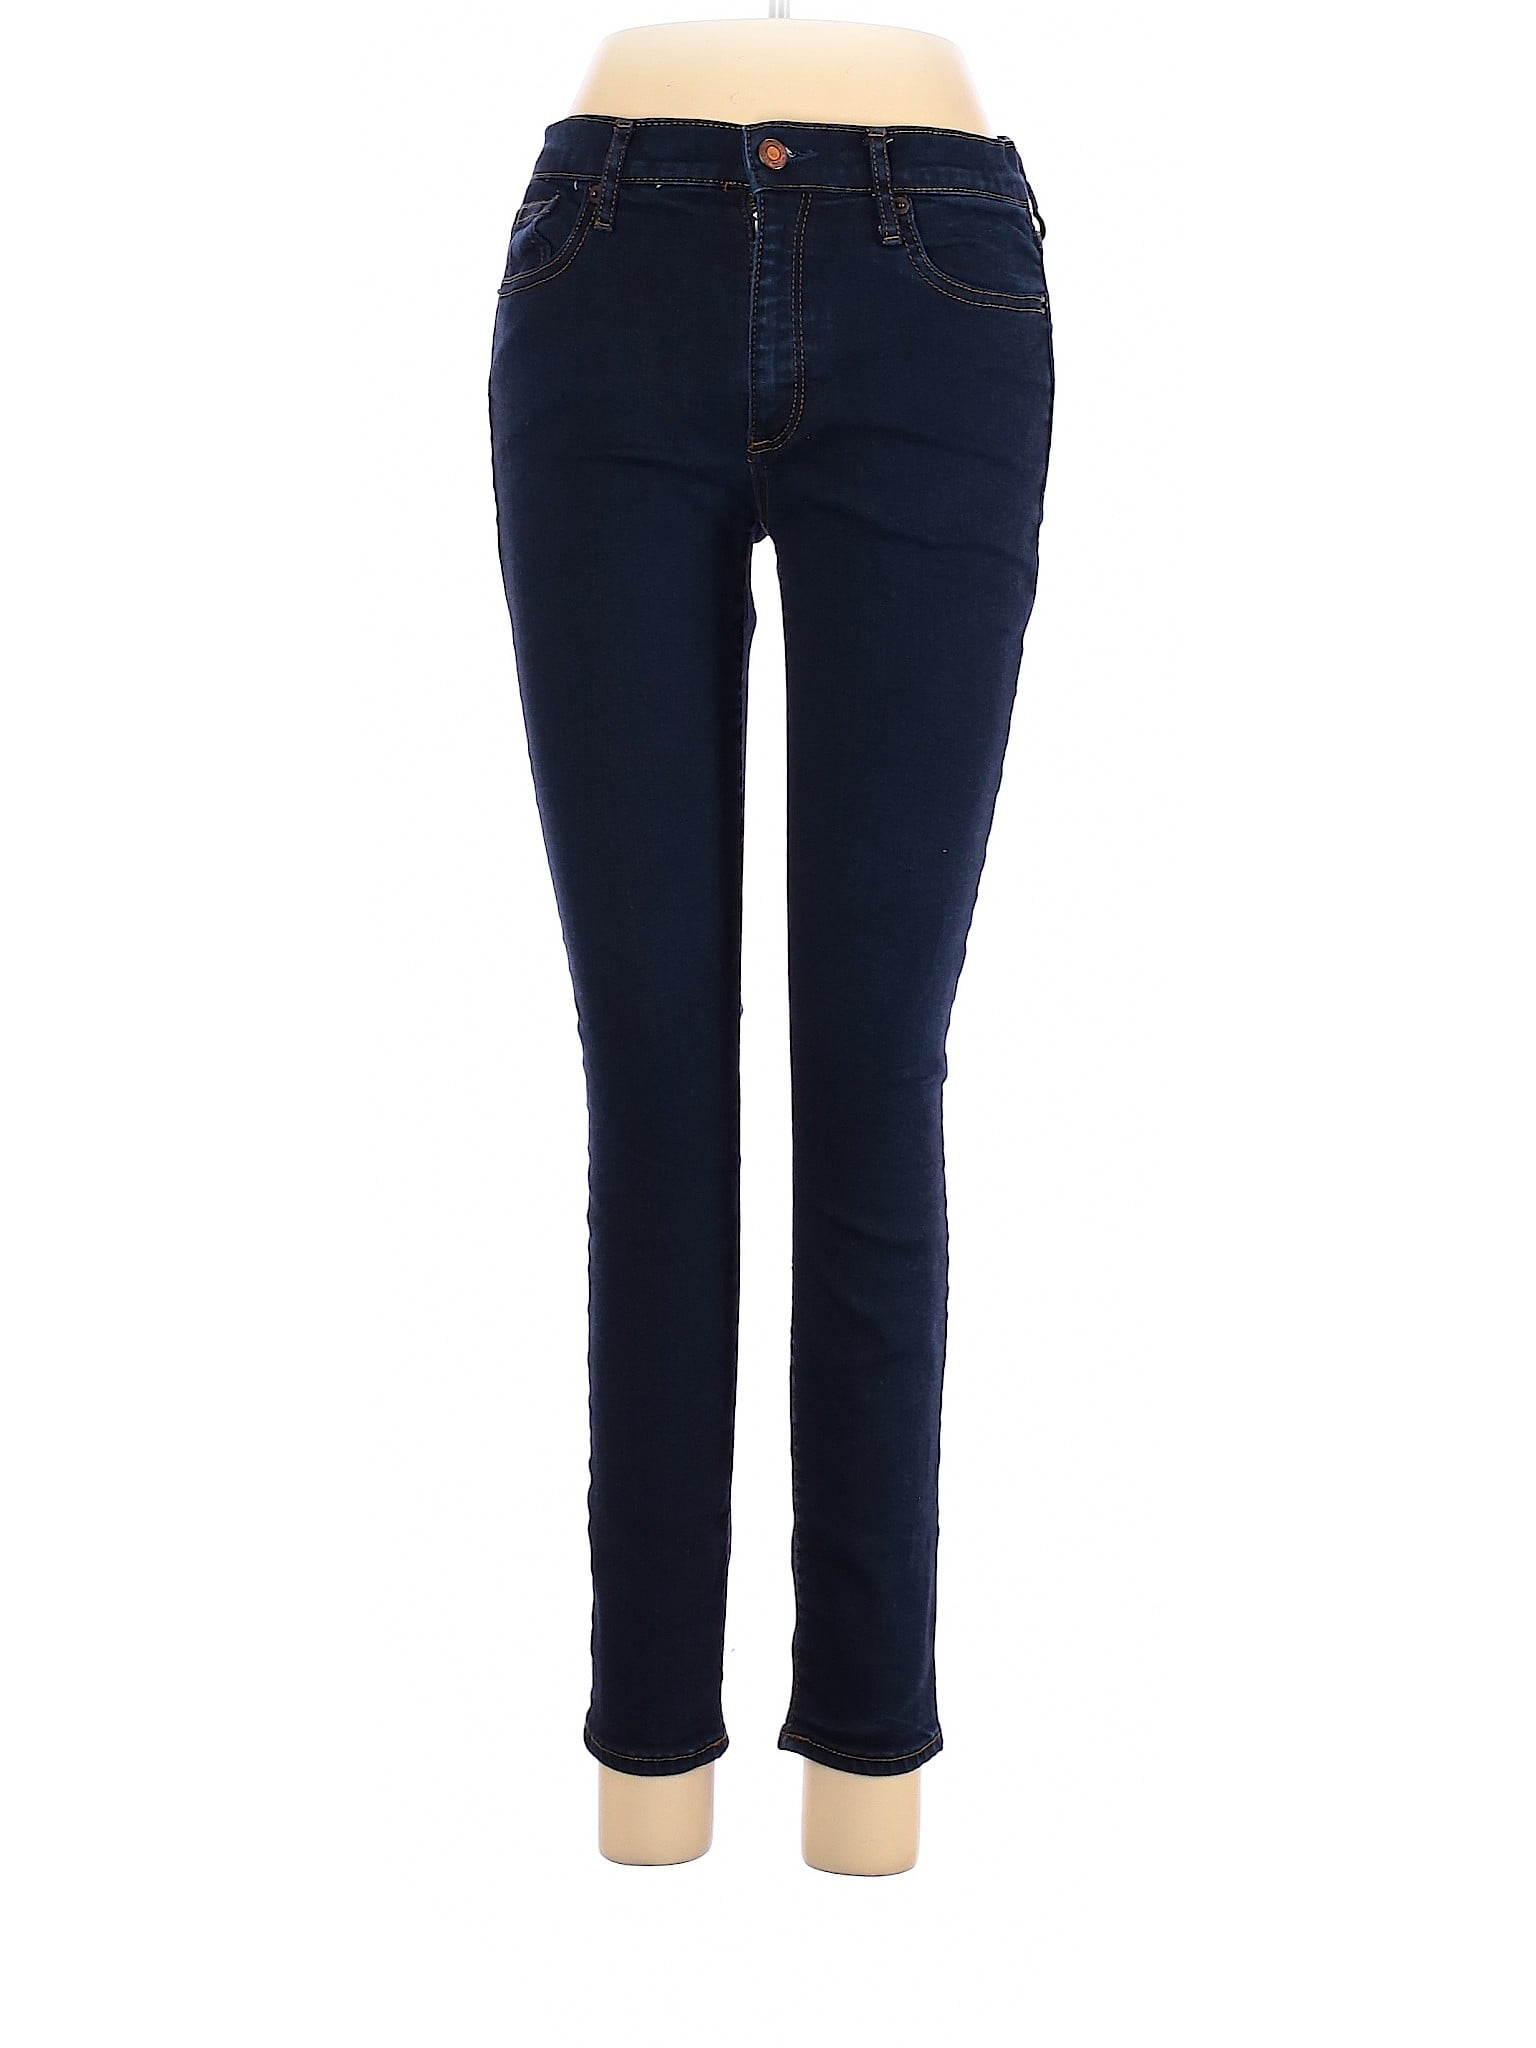 Gap - Pre-Owned Gap Women's Size 28 Petite Jeans - Walmart.com ...